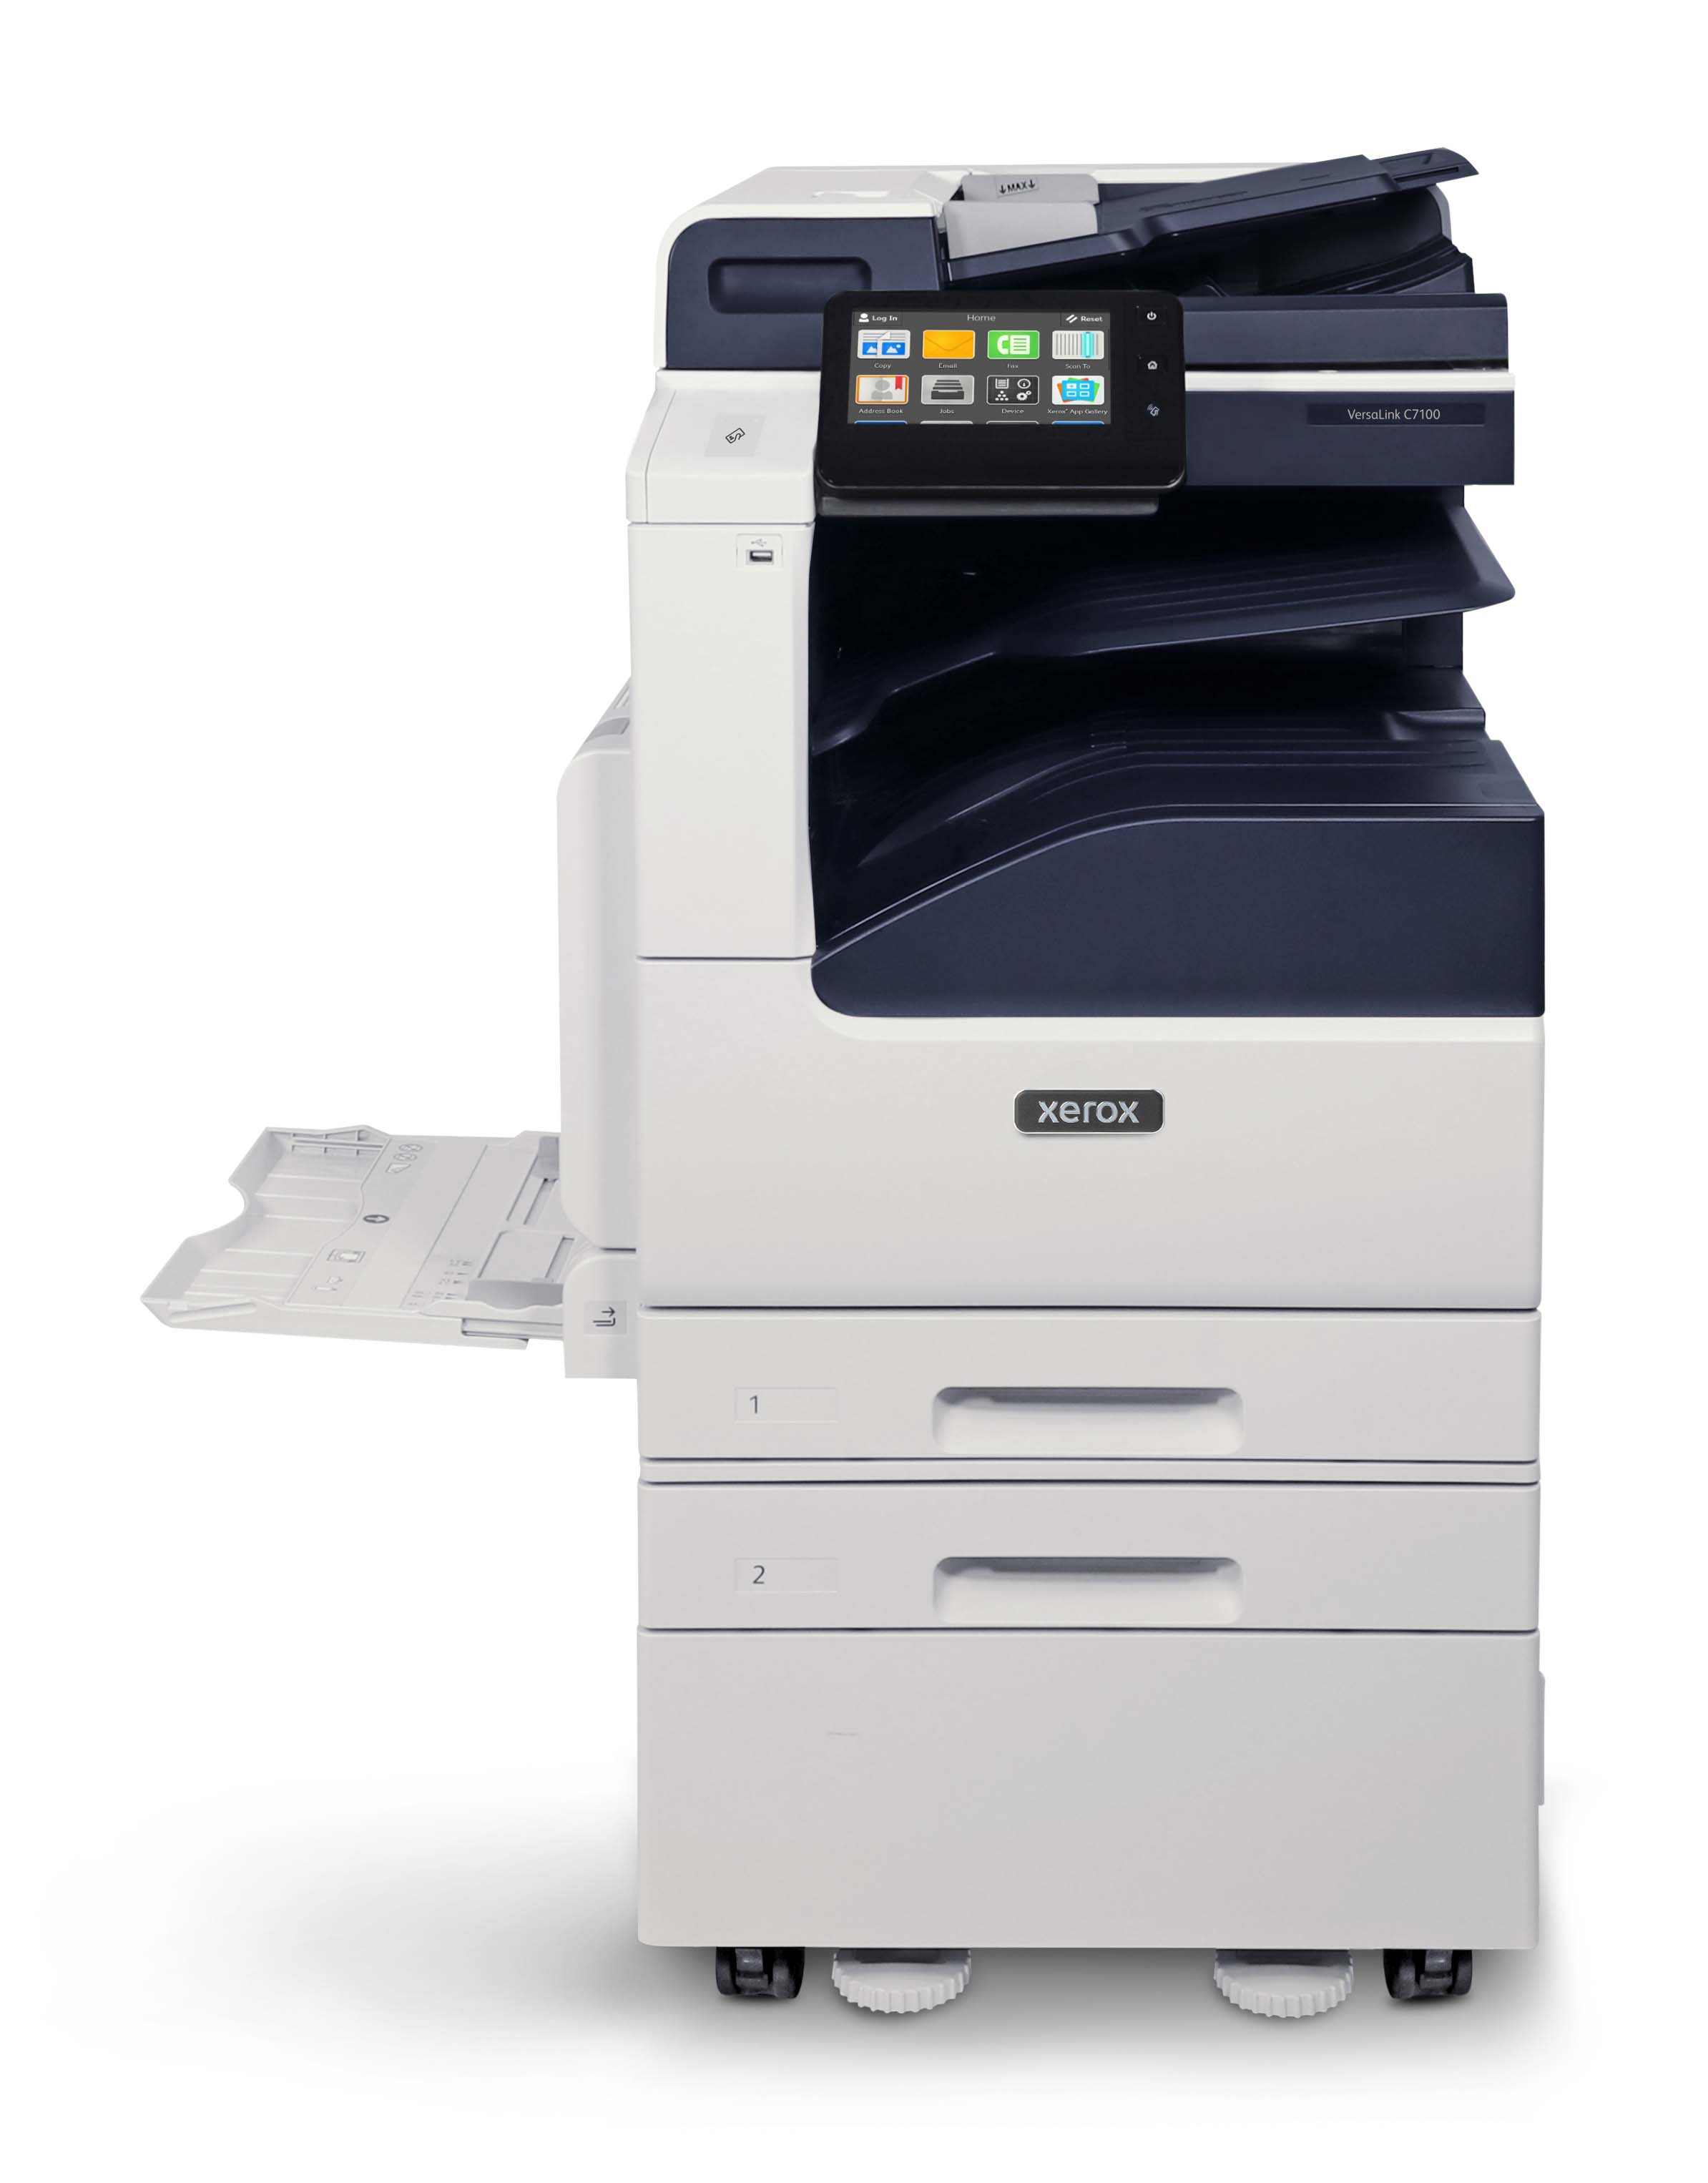 Xerox VersaLink C7120 Colour MultiFunction Printer - Two trays